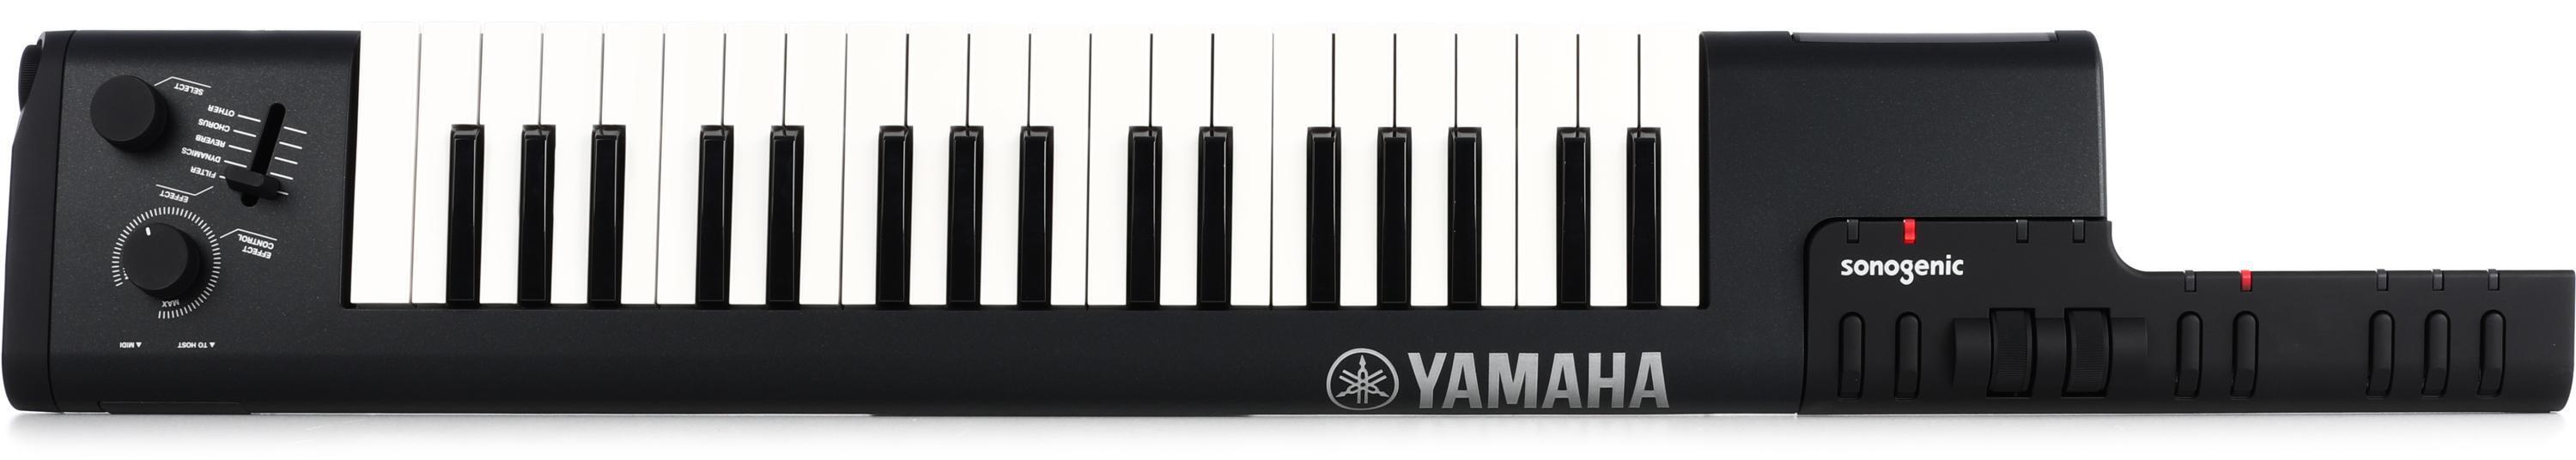 Yamaha Sonogenic SHS-500 37-key Keytar - Black | Sweetwater